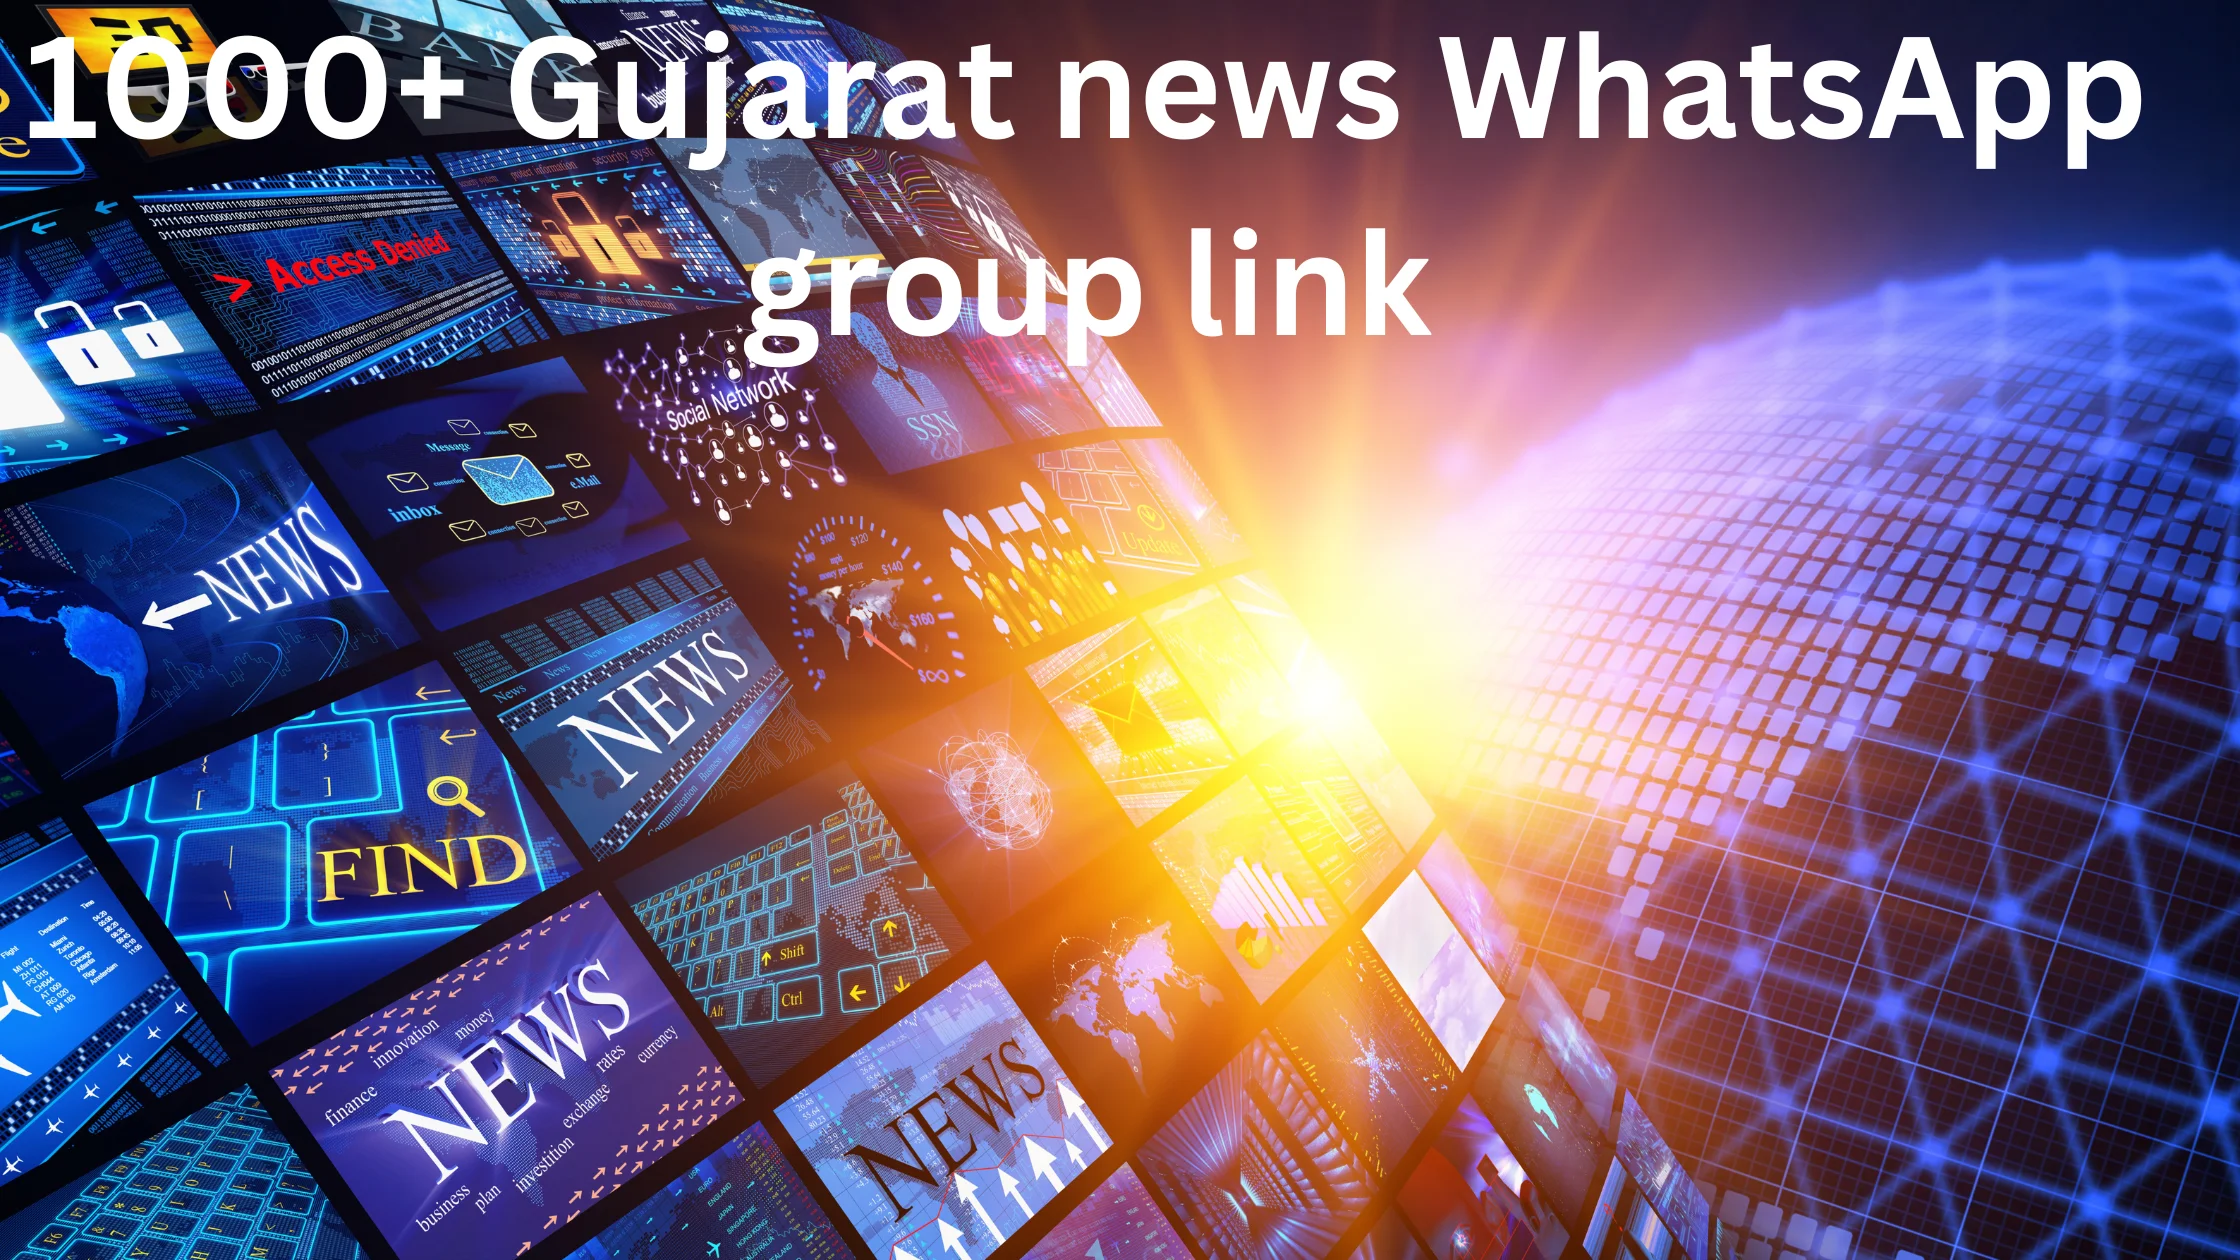 1000+ Gujarat news WhatsApp group link